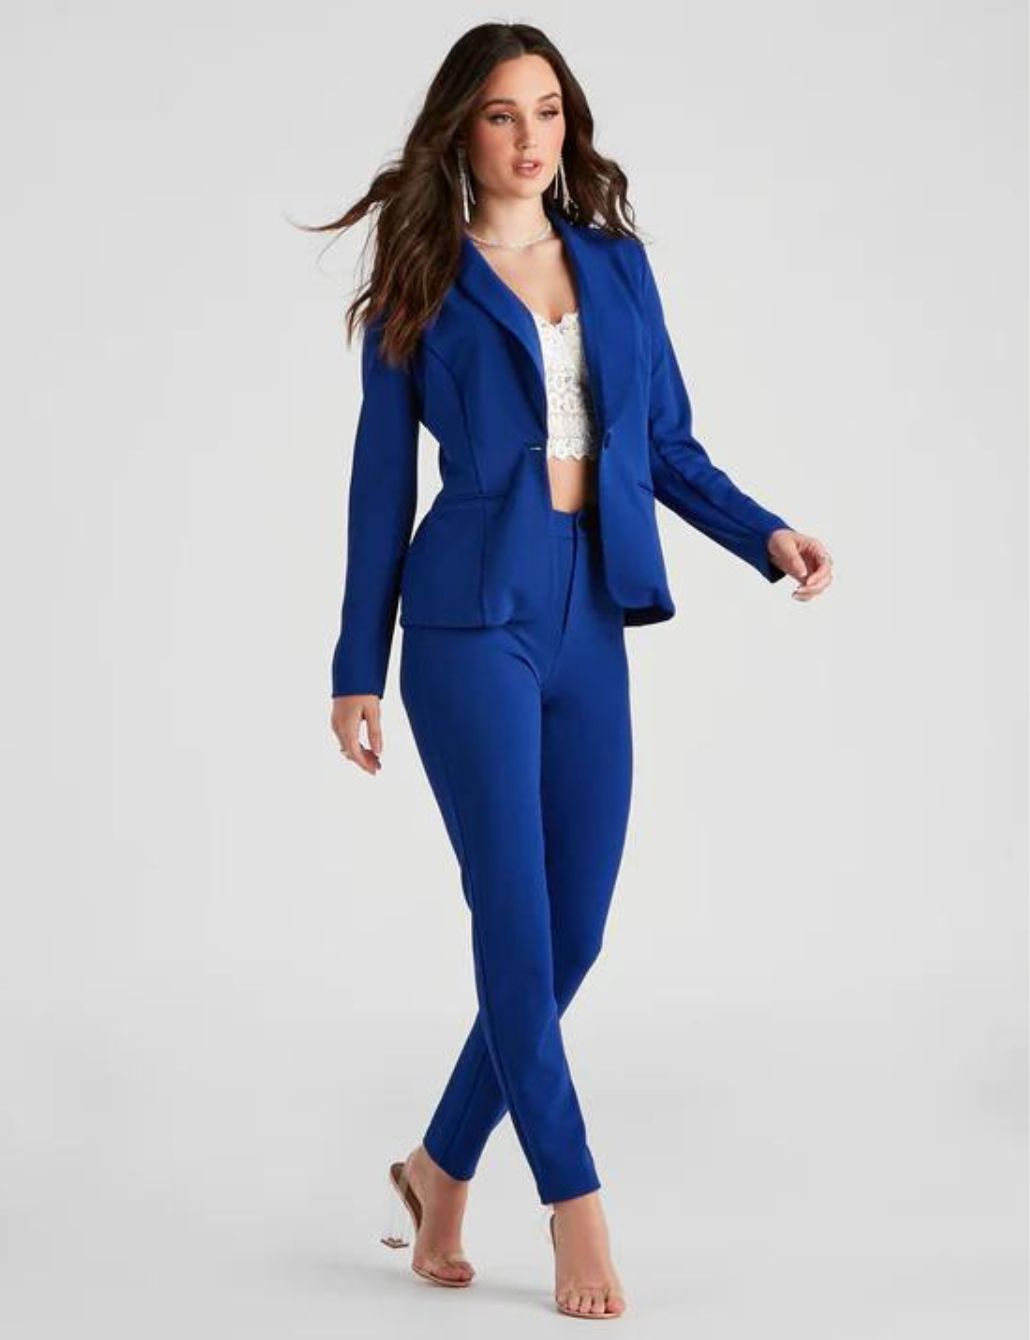 Blue Denim Two Piece Set Jeans Suit for Women Long Sleeve Jacket